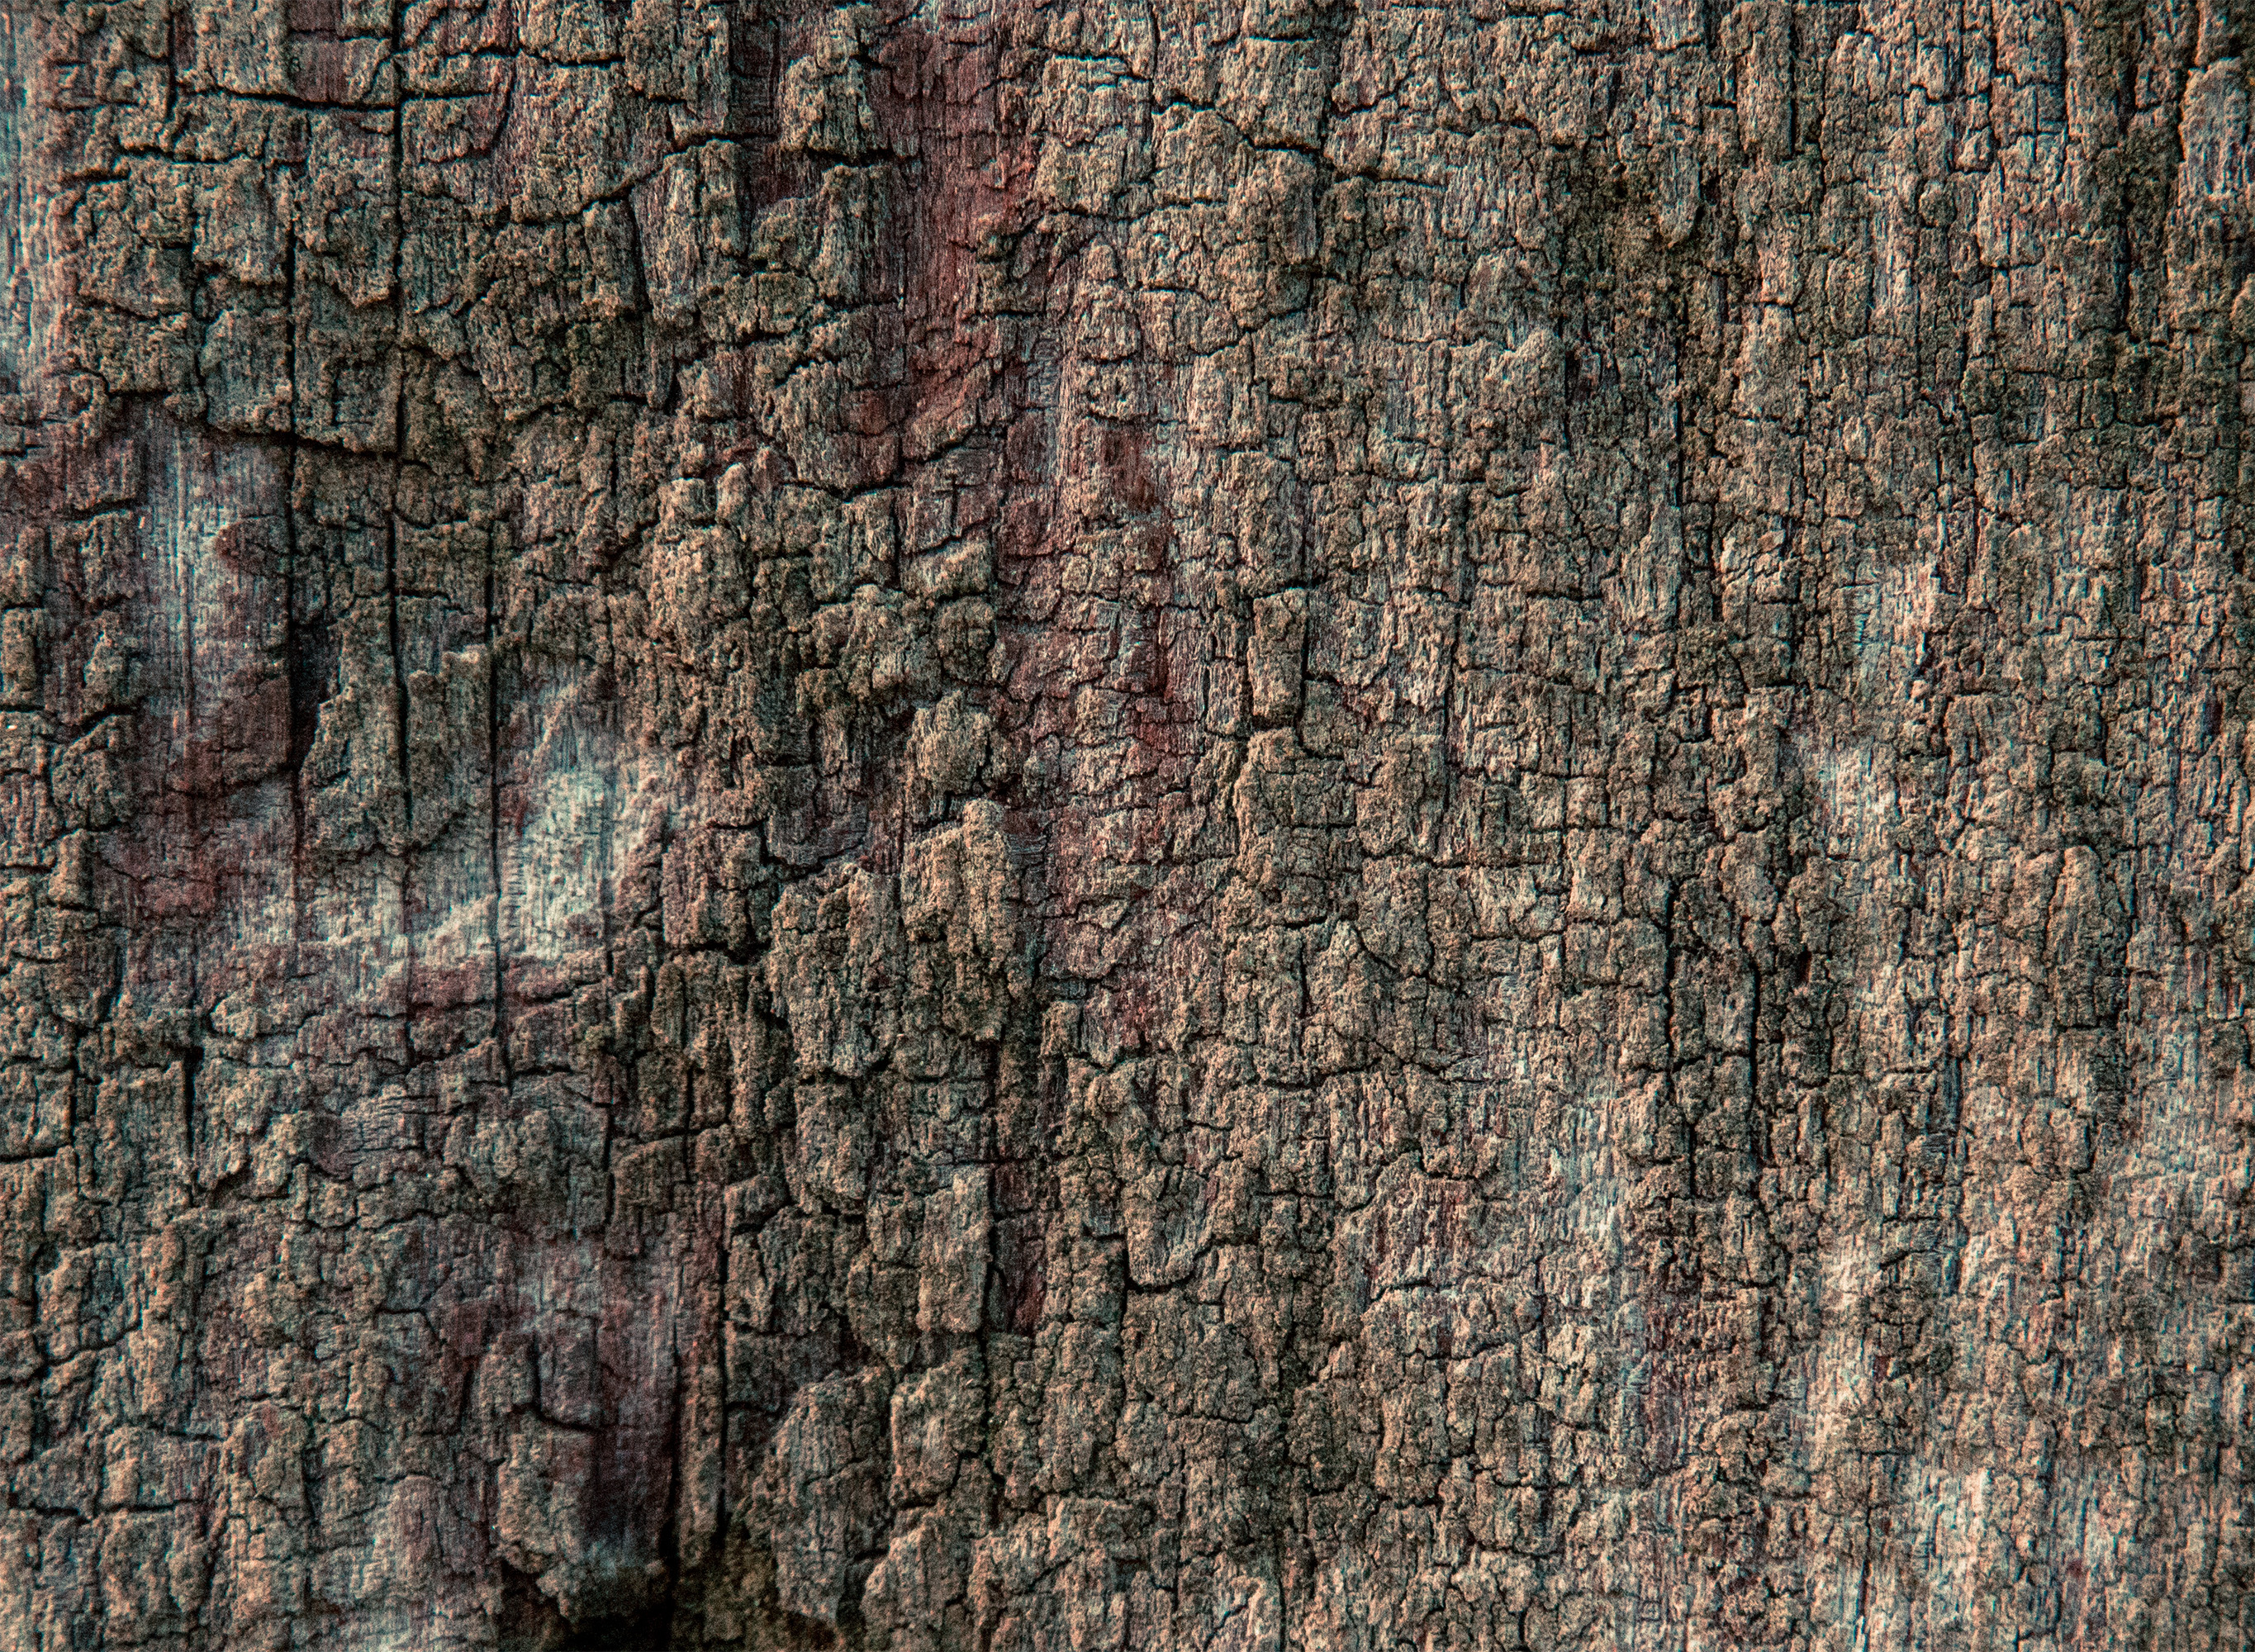 Wood texture, Closeup, Cracked, Dark, Old, HQ Photo